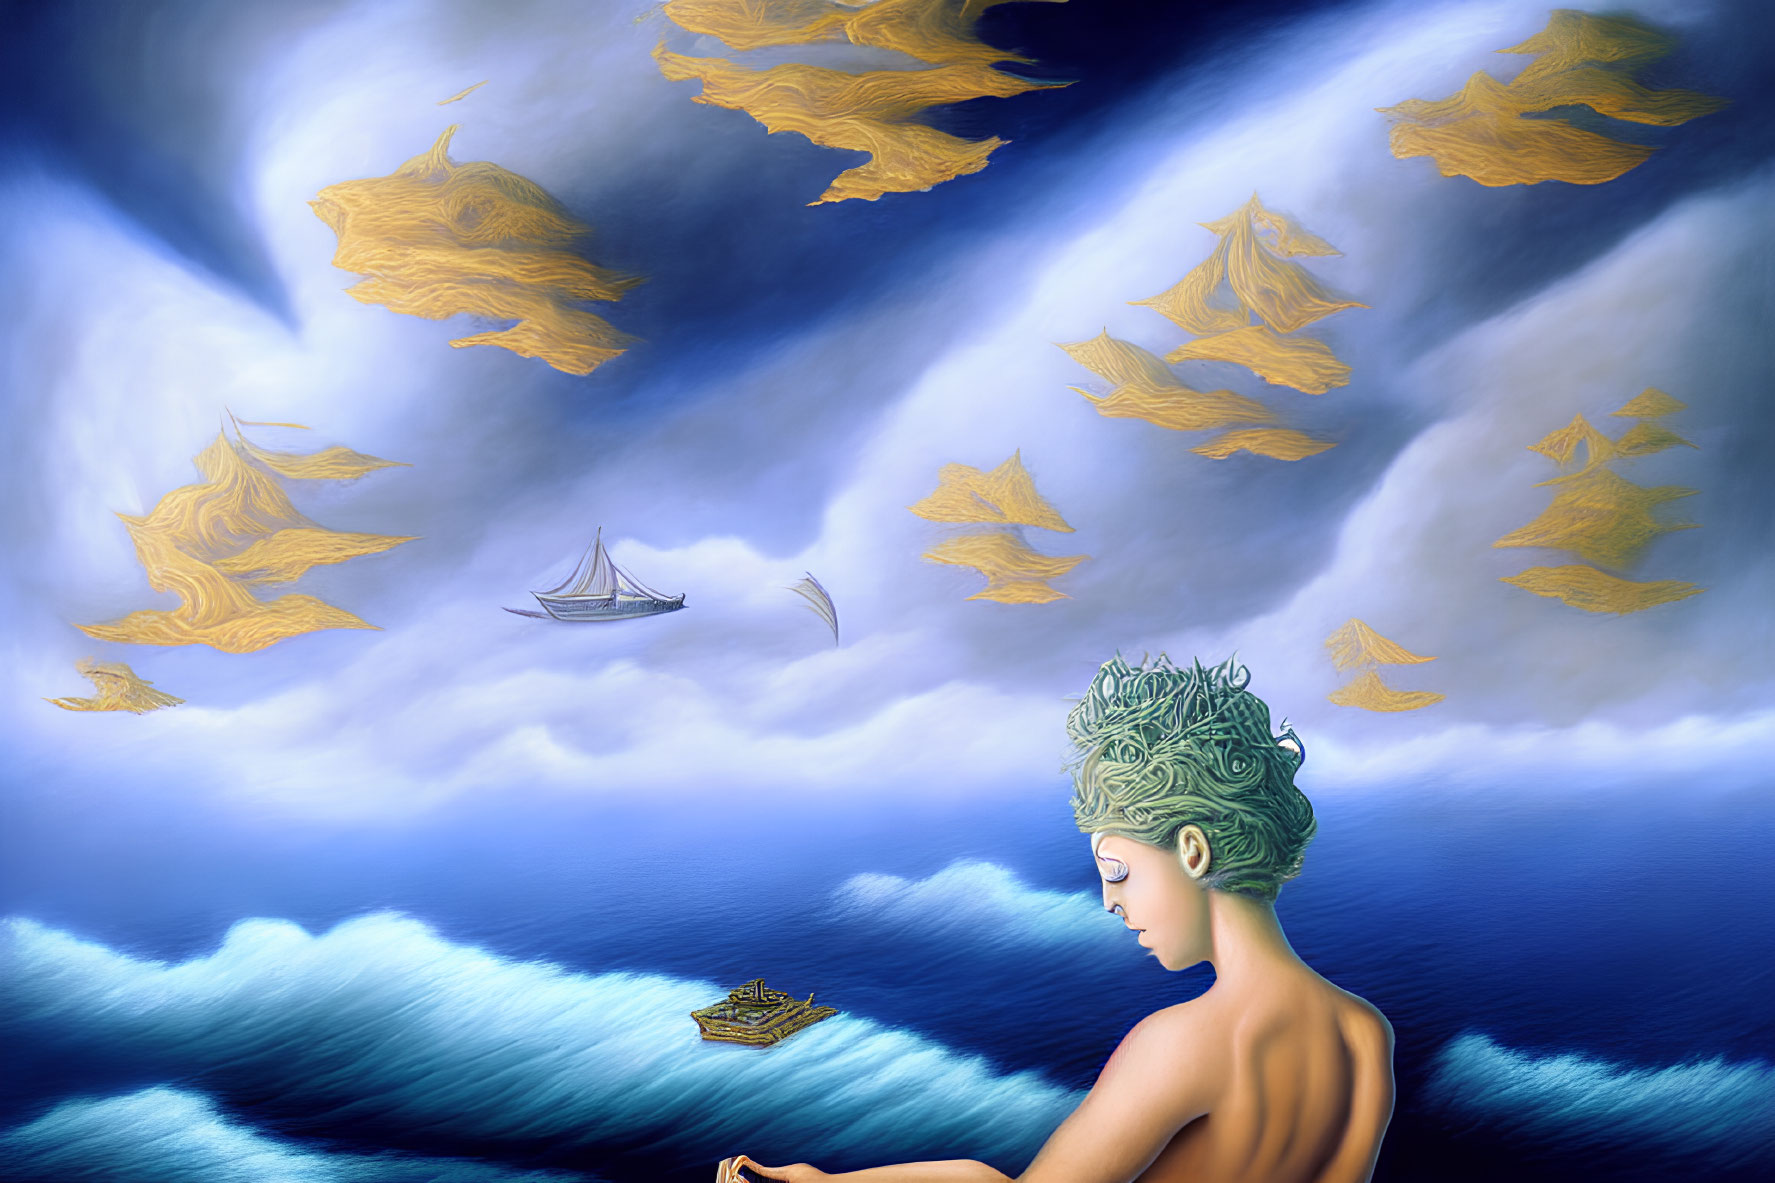 Surreal artwork: Woman with green hair, fish-shaped clouds, sailing boats